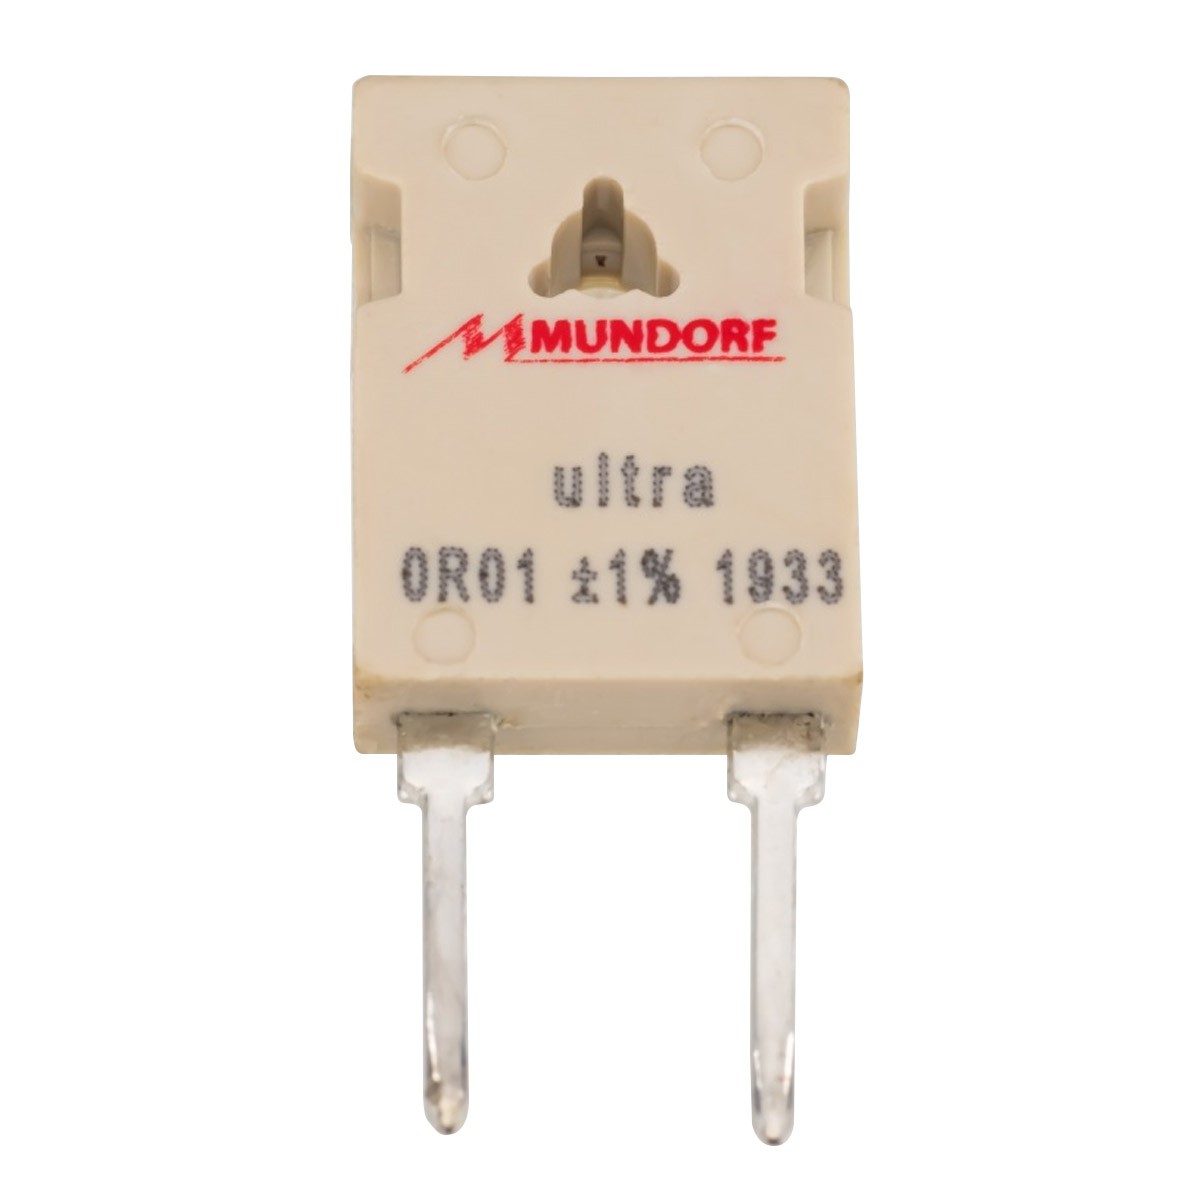 MUNDORF MRESIST ULTRA Resistor 30W 1 Ohm